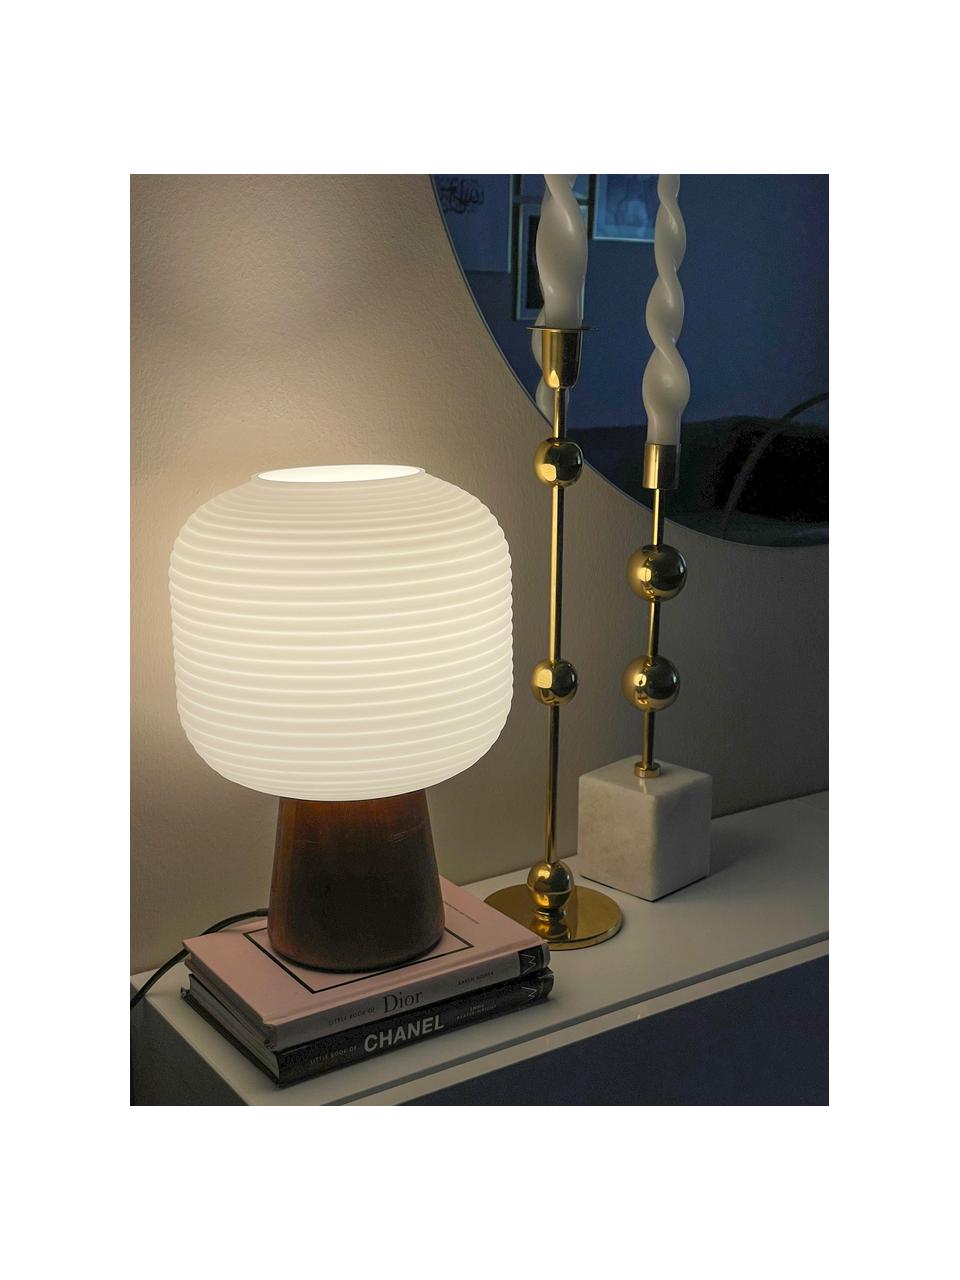 Kleine tafellamp Aura, Lampenkap: glas, Lampvoet: hout, Bruin, wit, Ø 20 x H 29 cm